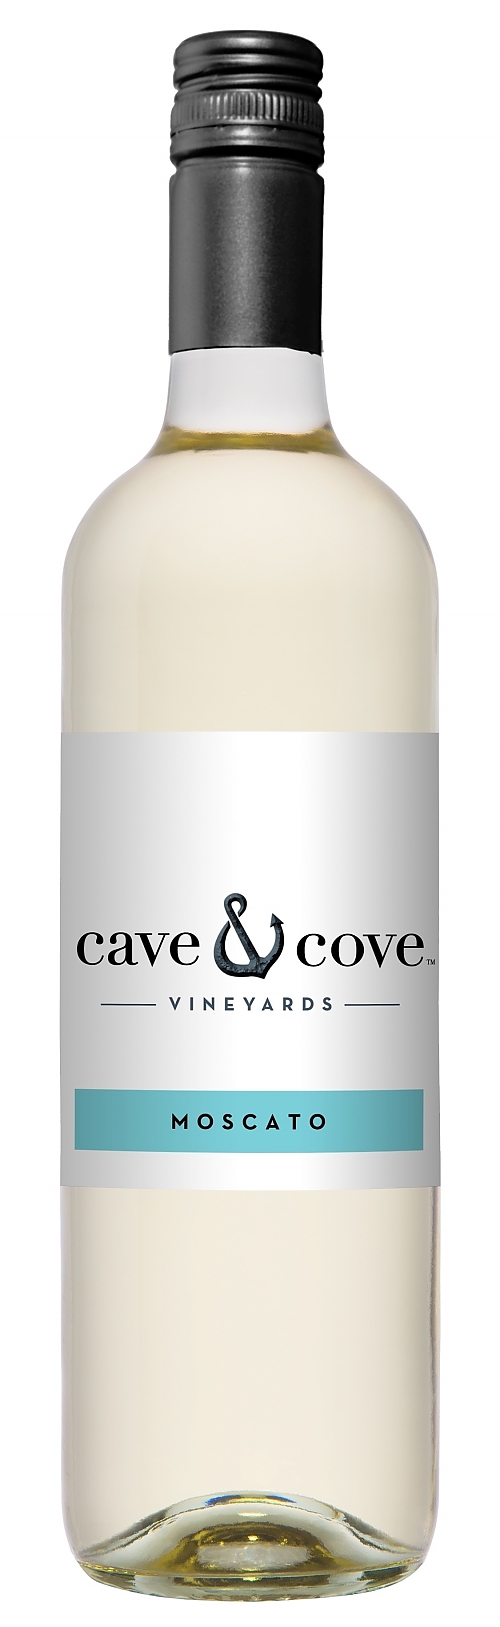 Cave-Cove_MOSC